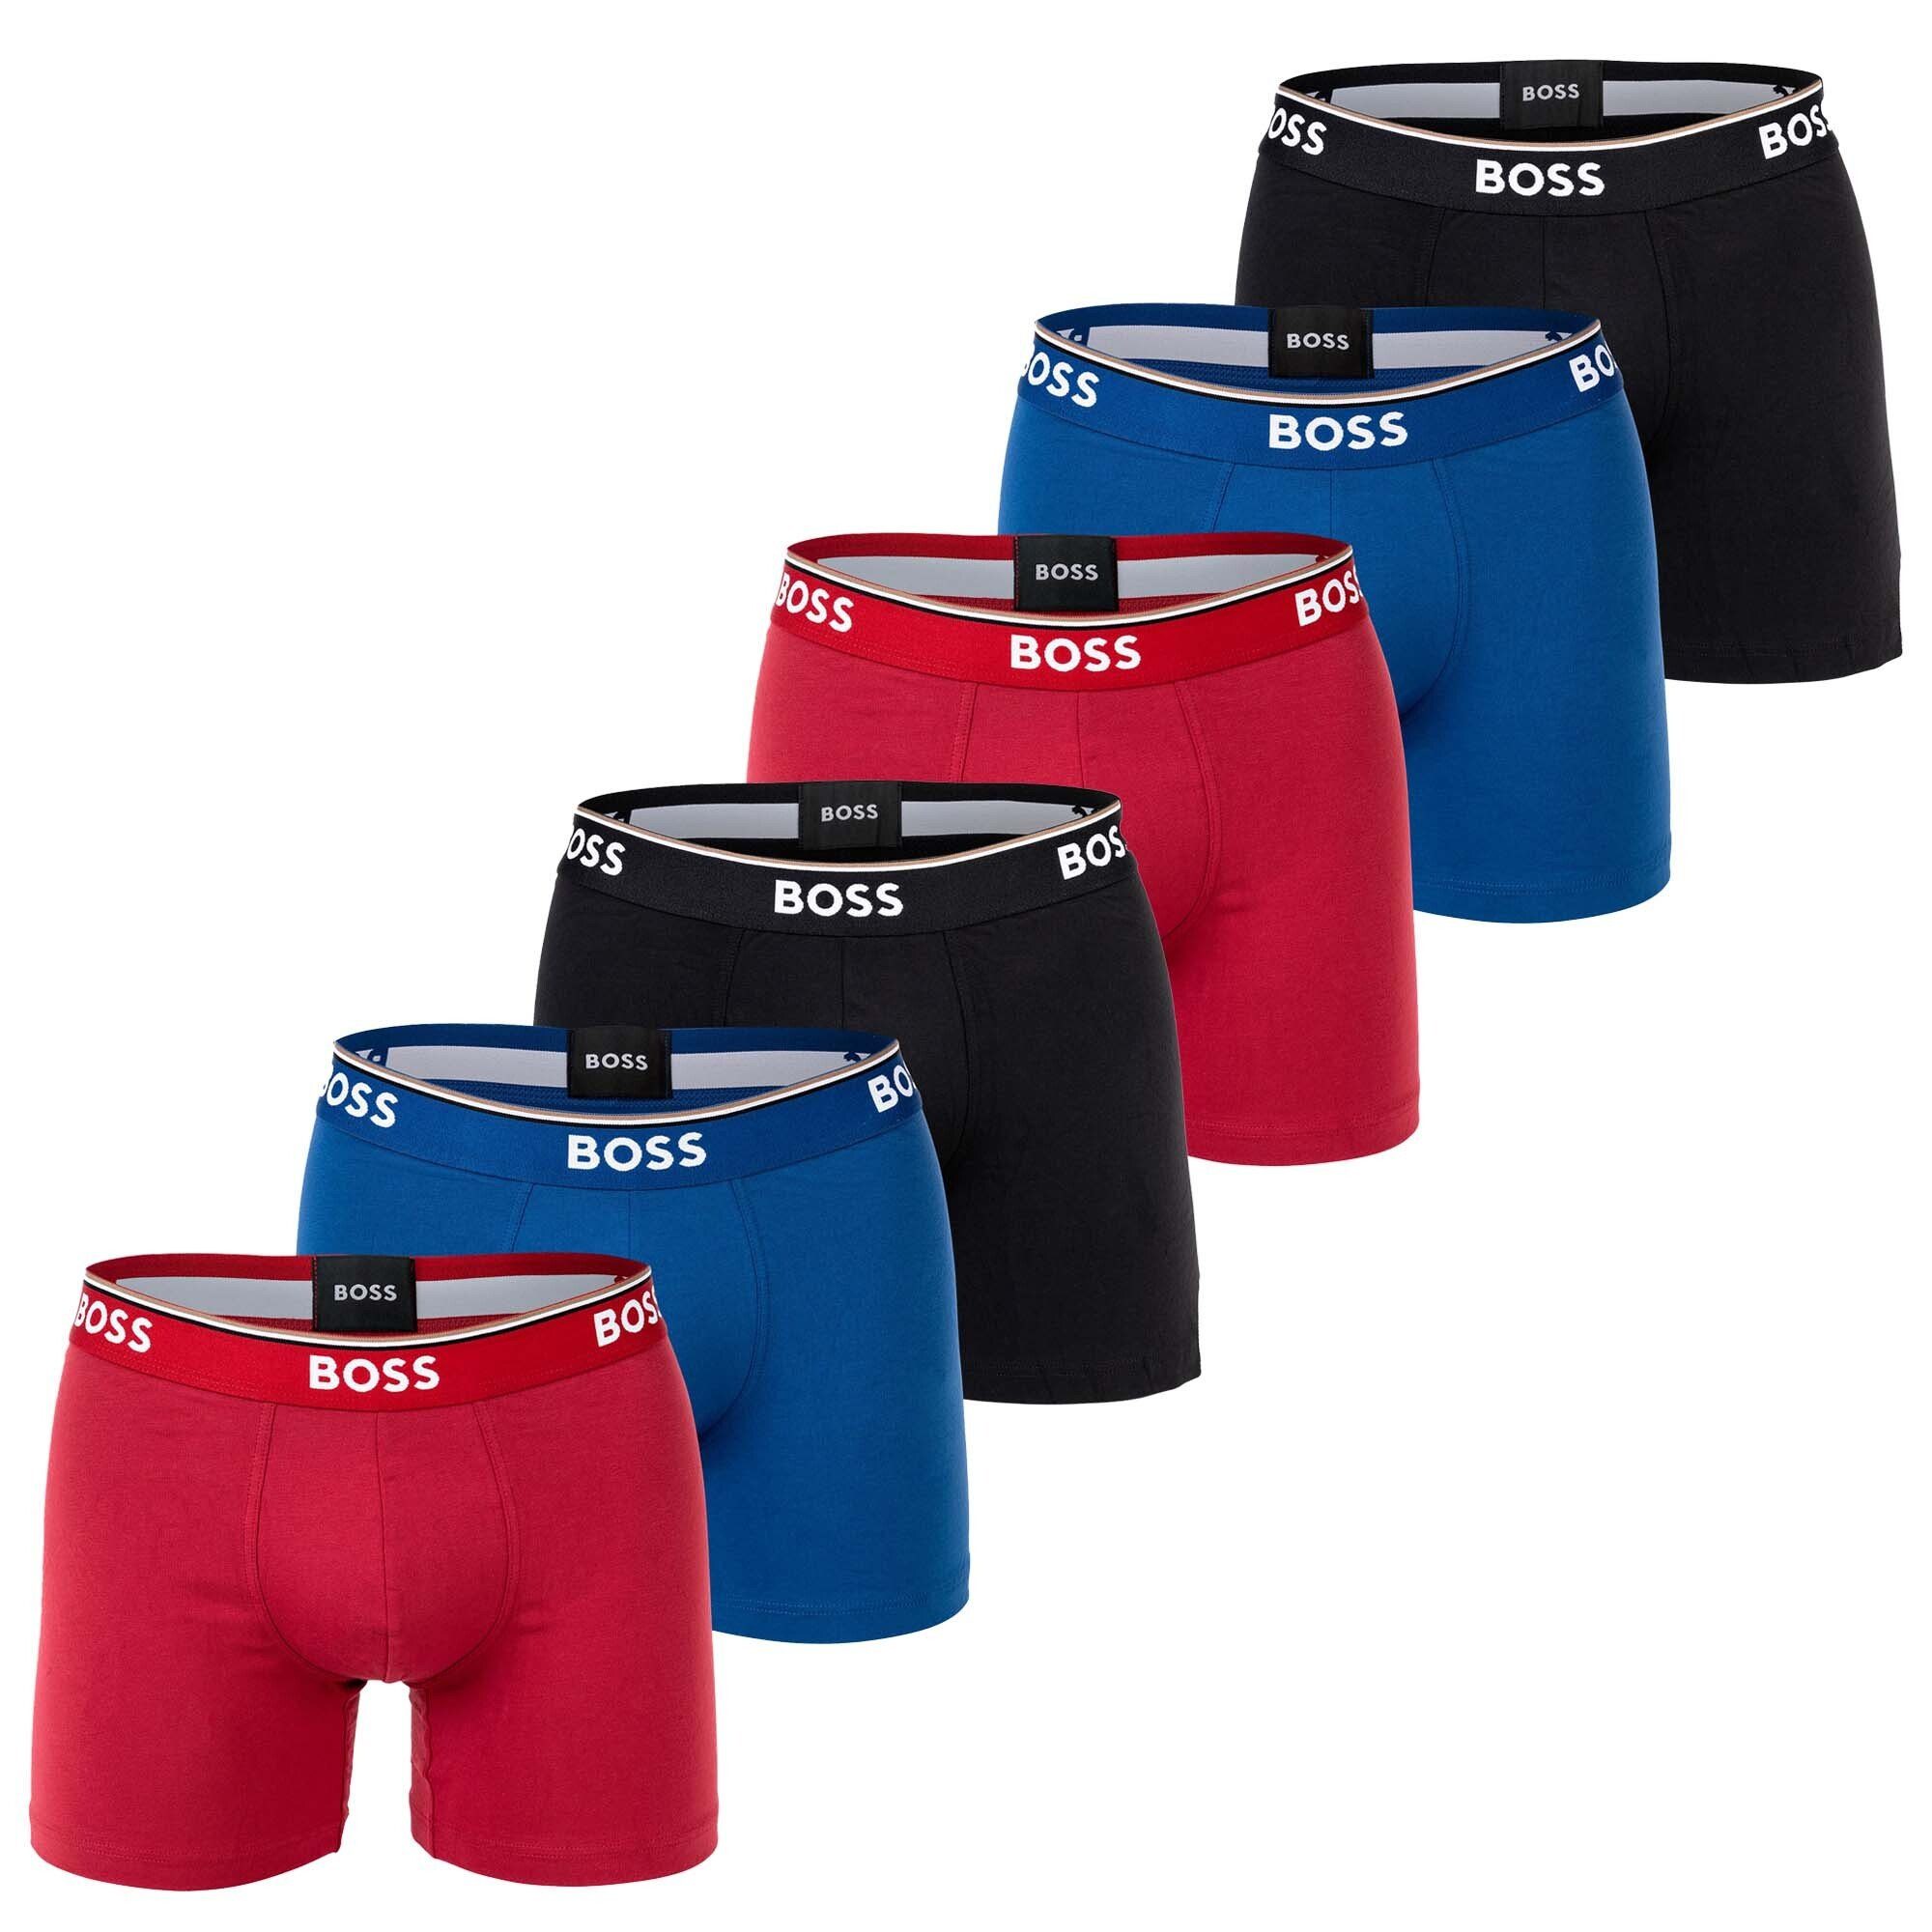 BOSS Boxer Herren Boxershorts, 6er Briefs - Rot/Blau/Schwarz 6P Pack Boxer